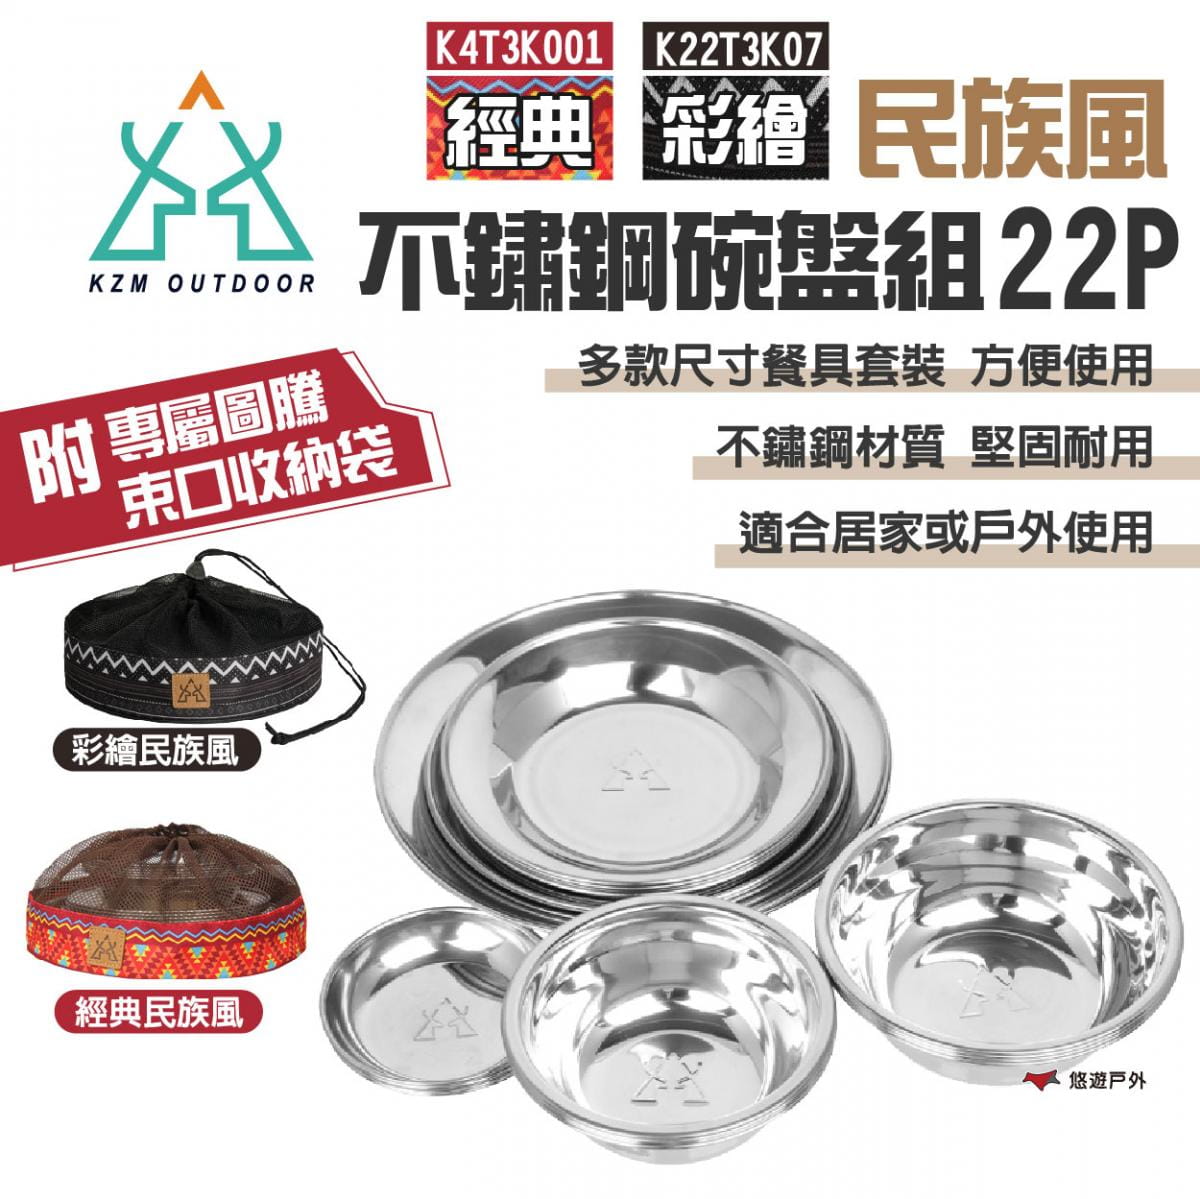 【KZM】經典/彩繪民族風不鏽鋼碗盤組22P 悠遊戶外 1